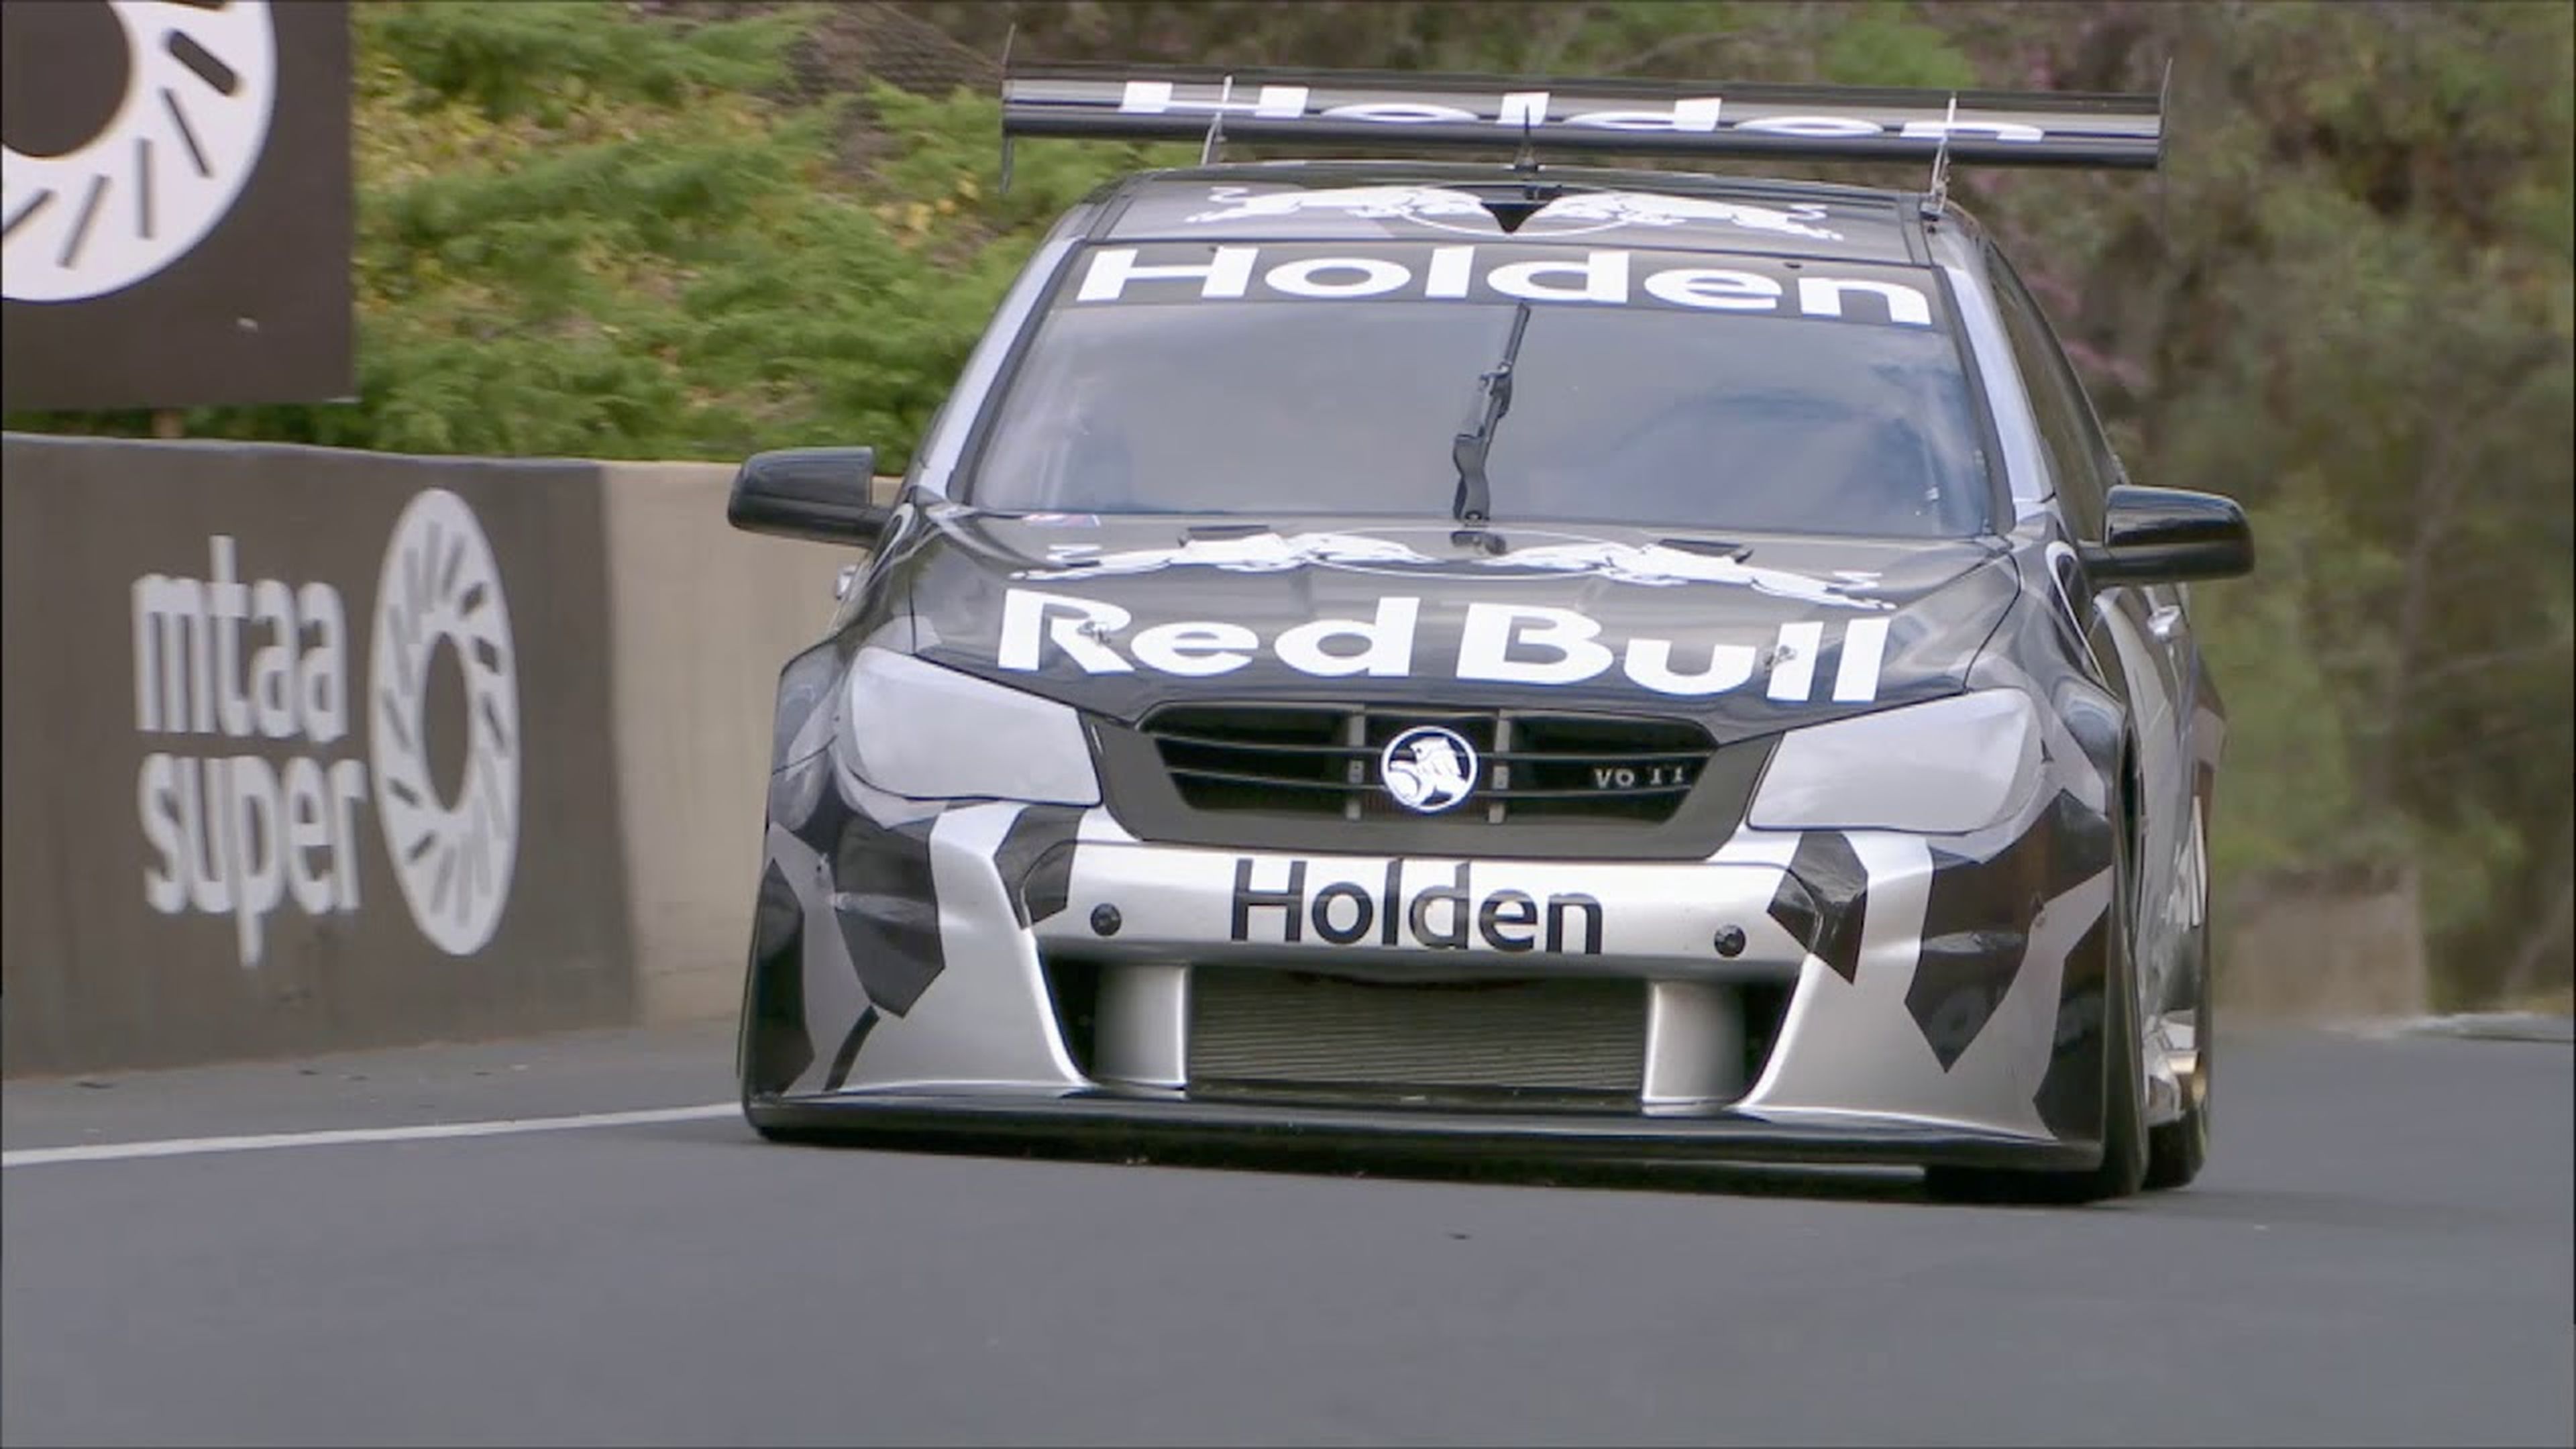 Red Bull Holden Racing Team